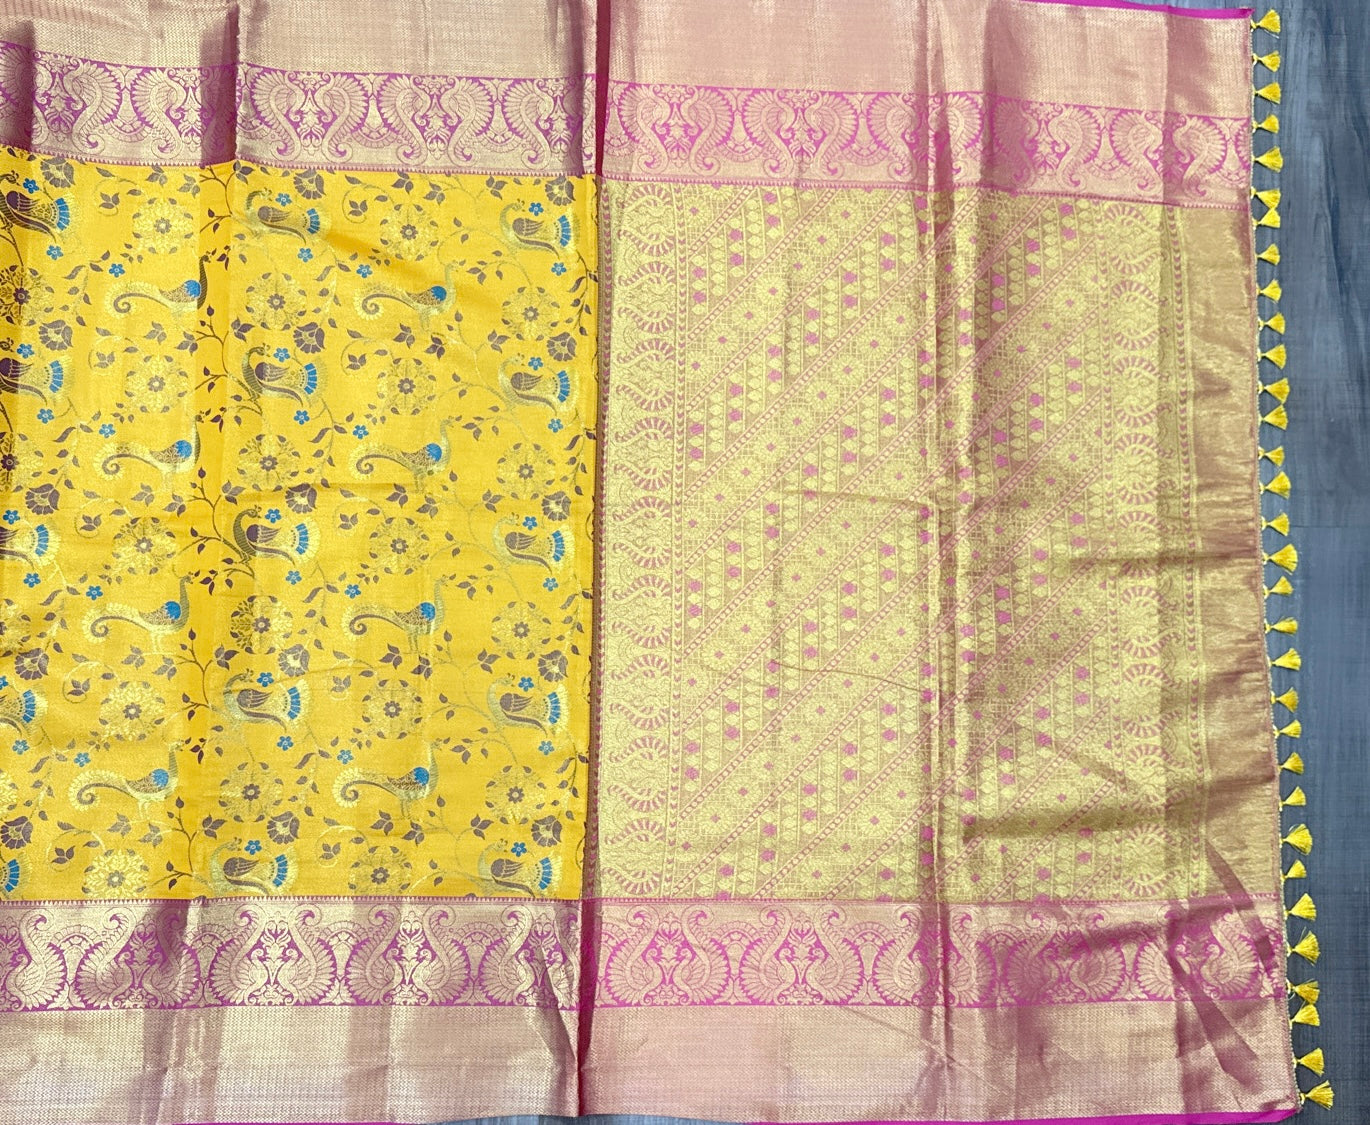 Gorgeous Banarasi Silk Saree with Pattu Border in Yellow and Magenta Pink Combo (saree only  and BP attached)